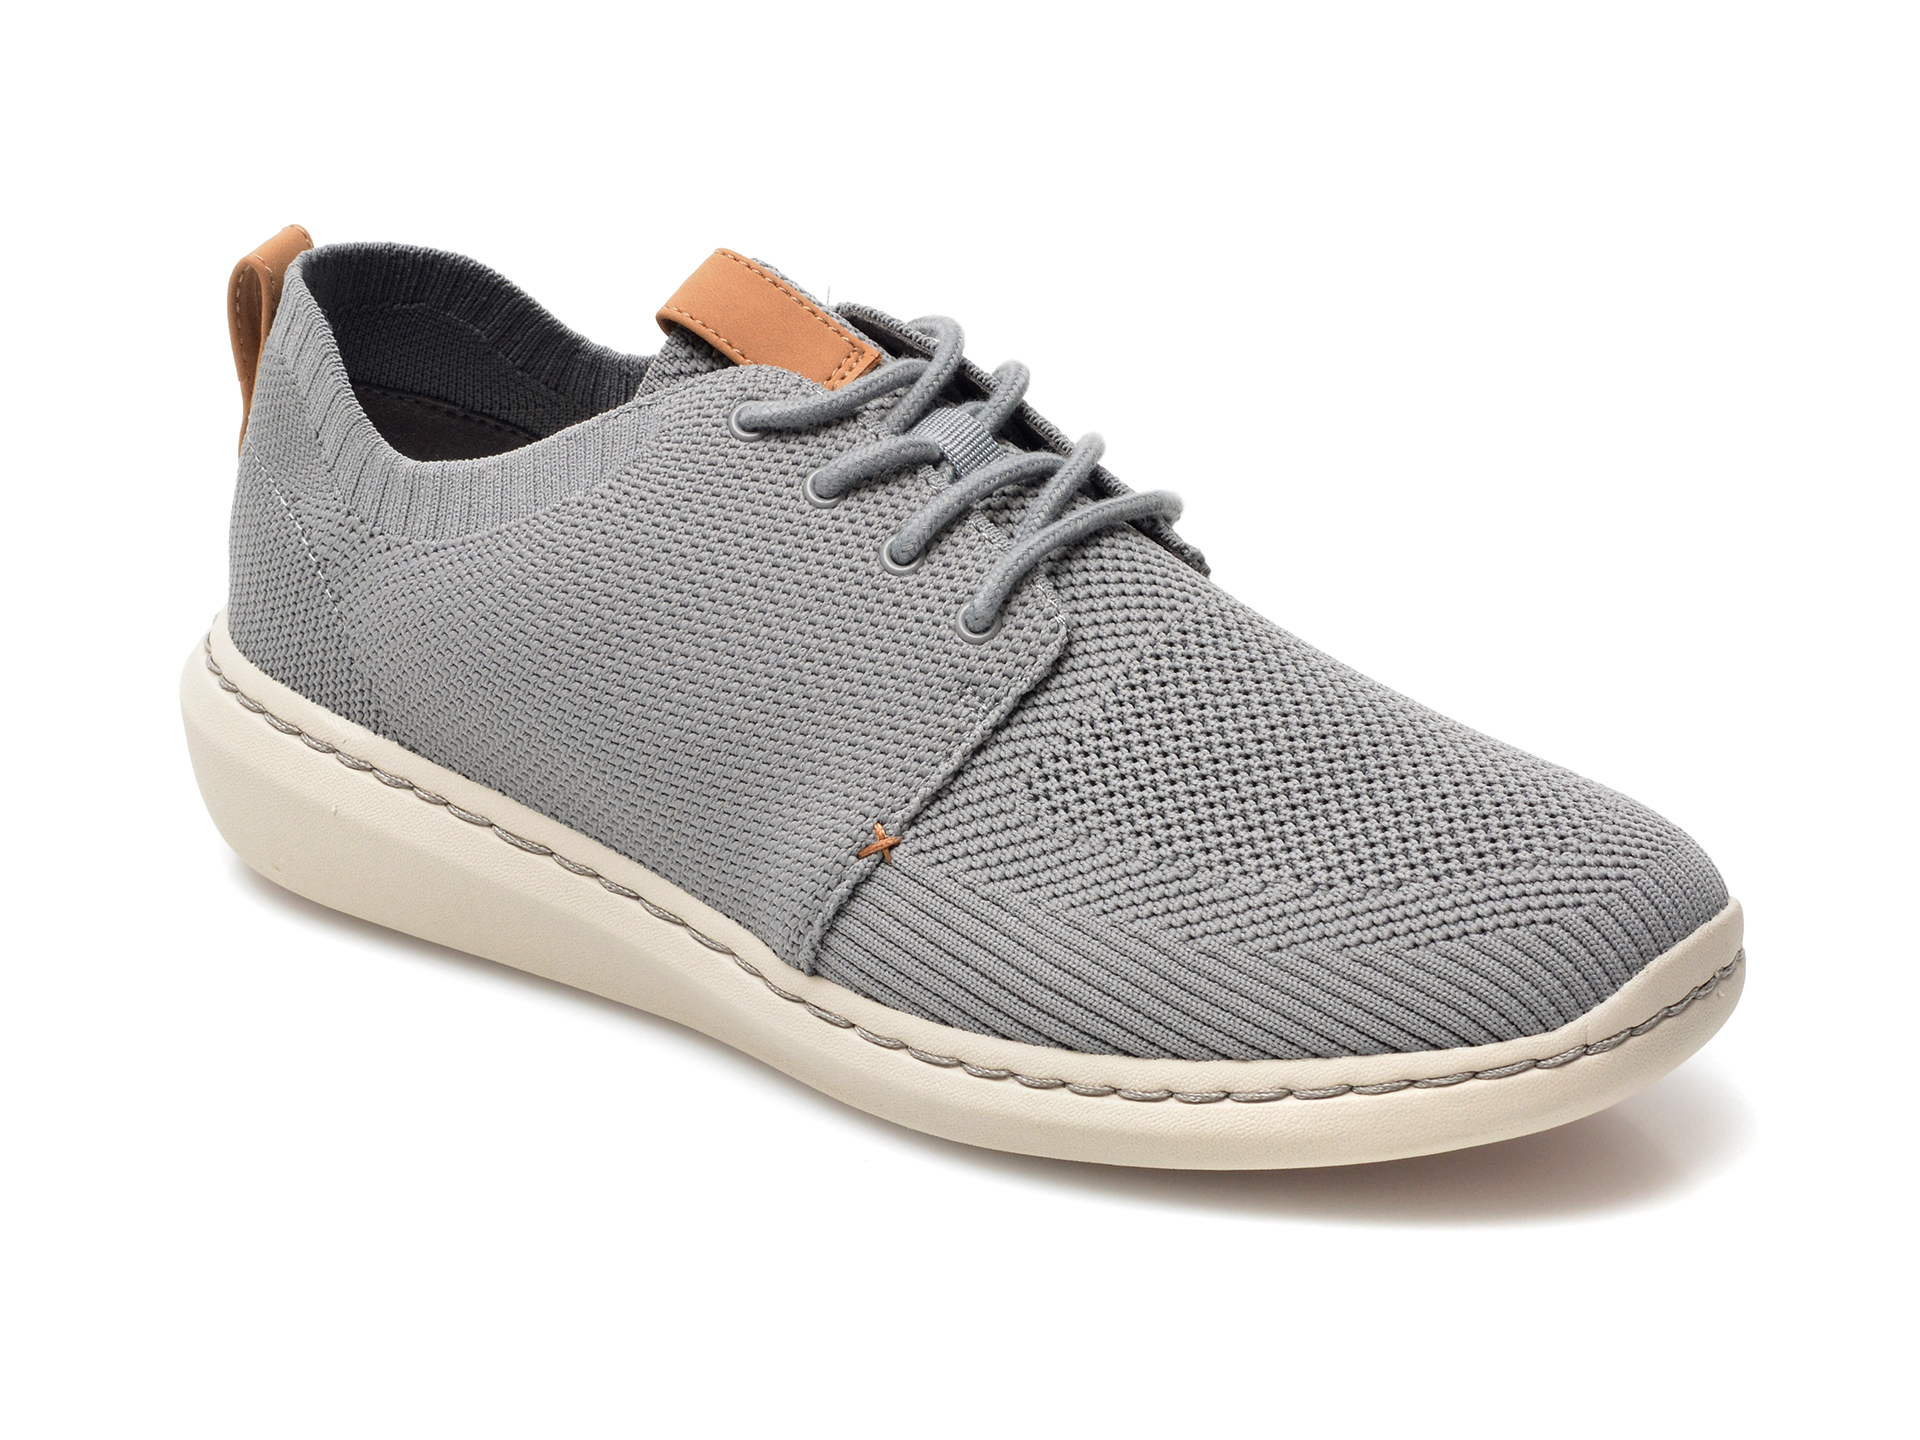 Pantofi sport CLARKS gri, STEP URBAN MIX, din material textil Clarks